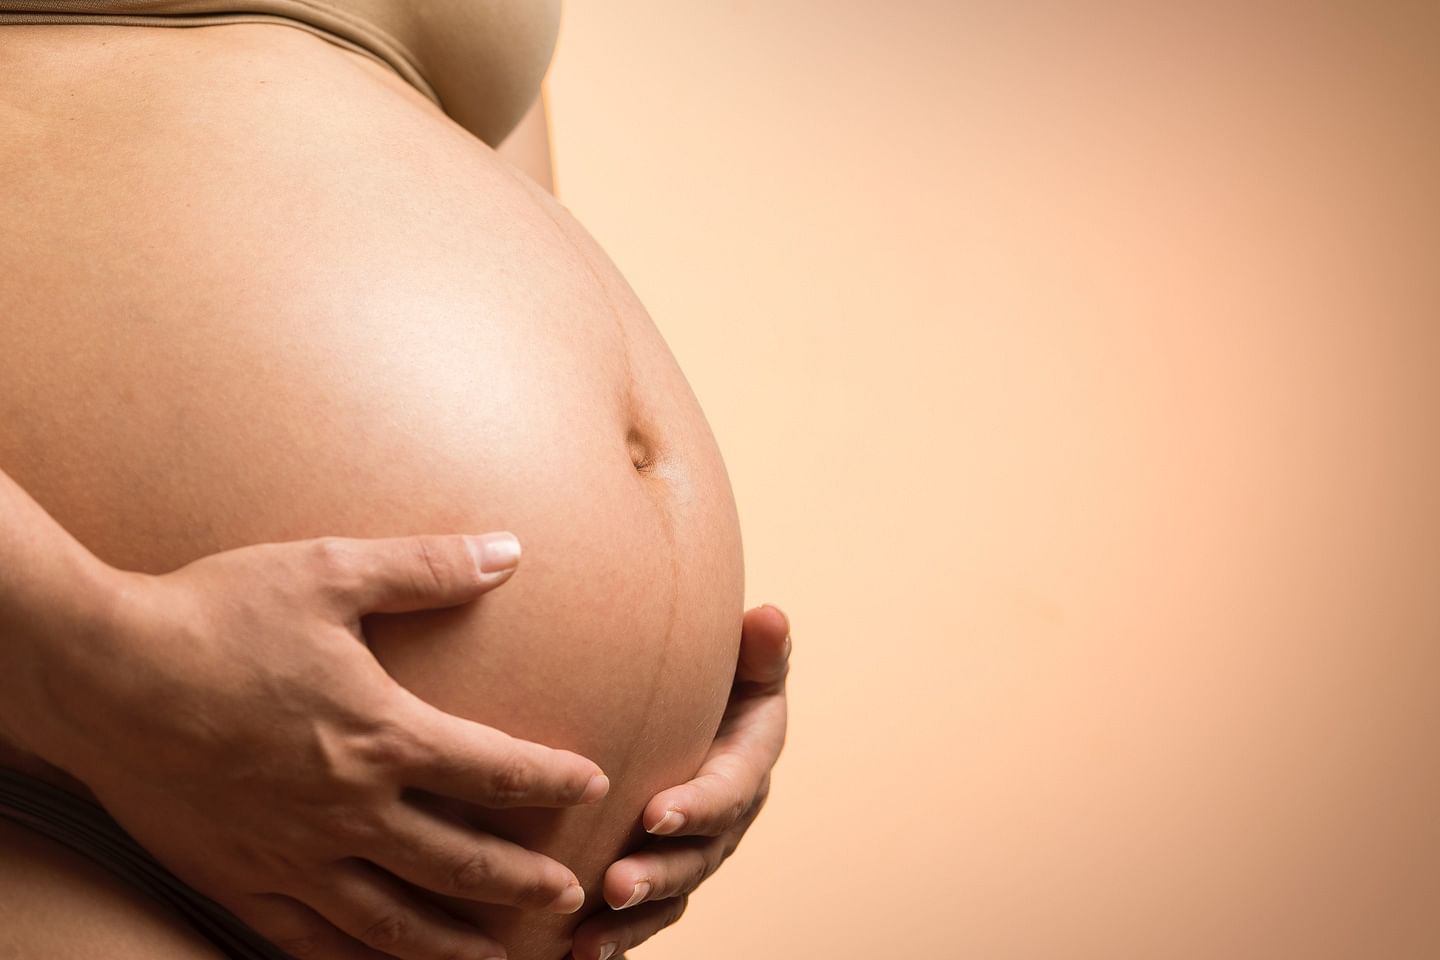 teacher making fraud by fake pregnancy for maternity leave